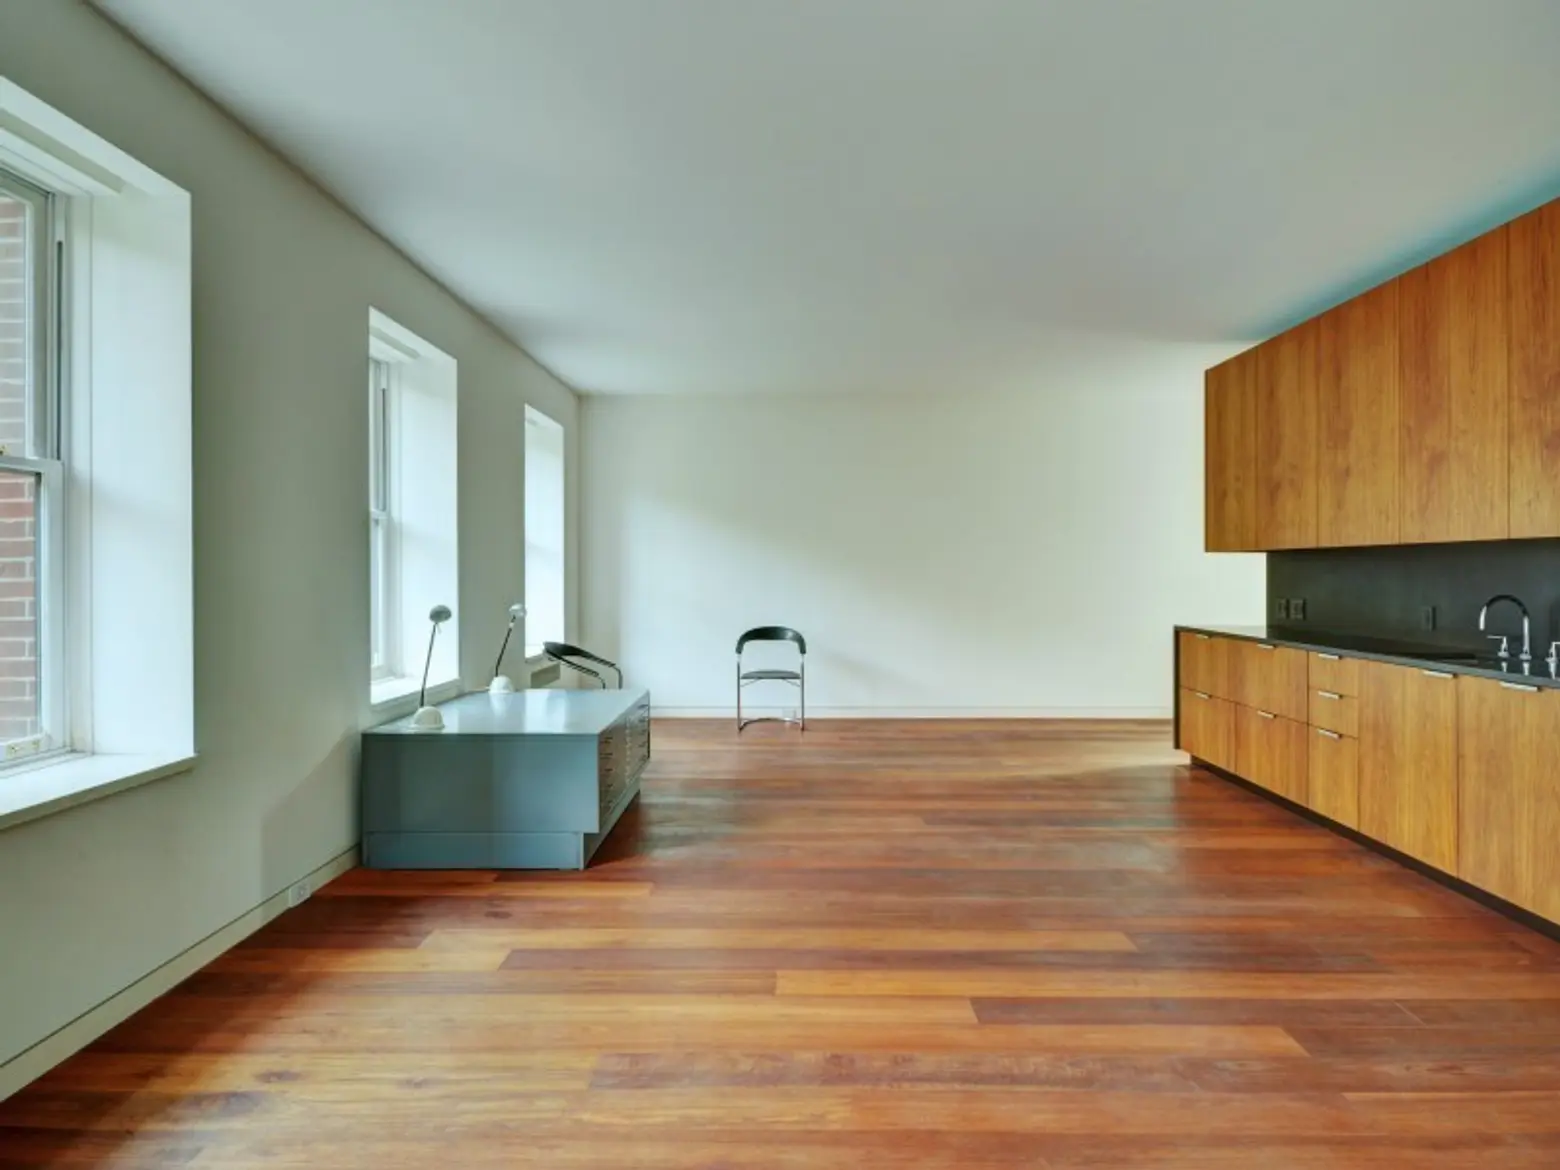 Light Installation Artist James Turrell Sells Gramercy Park Apartment for $2M